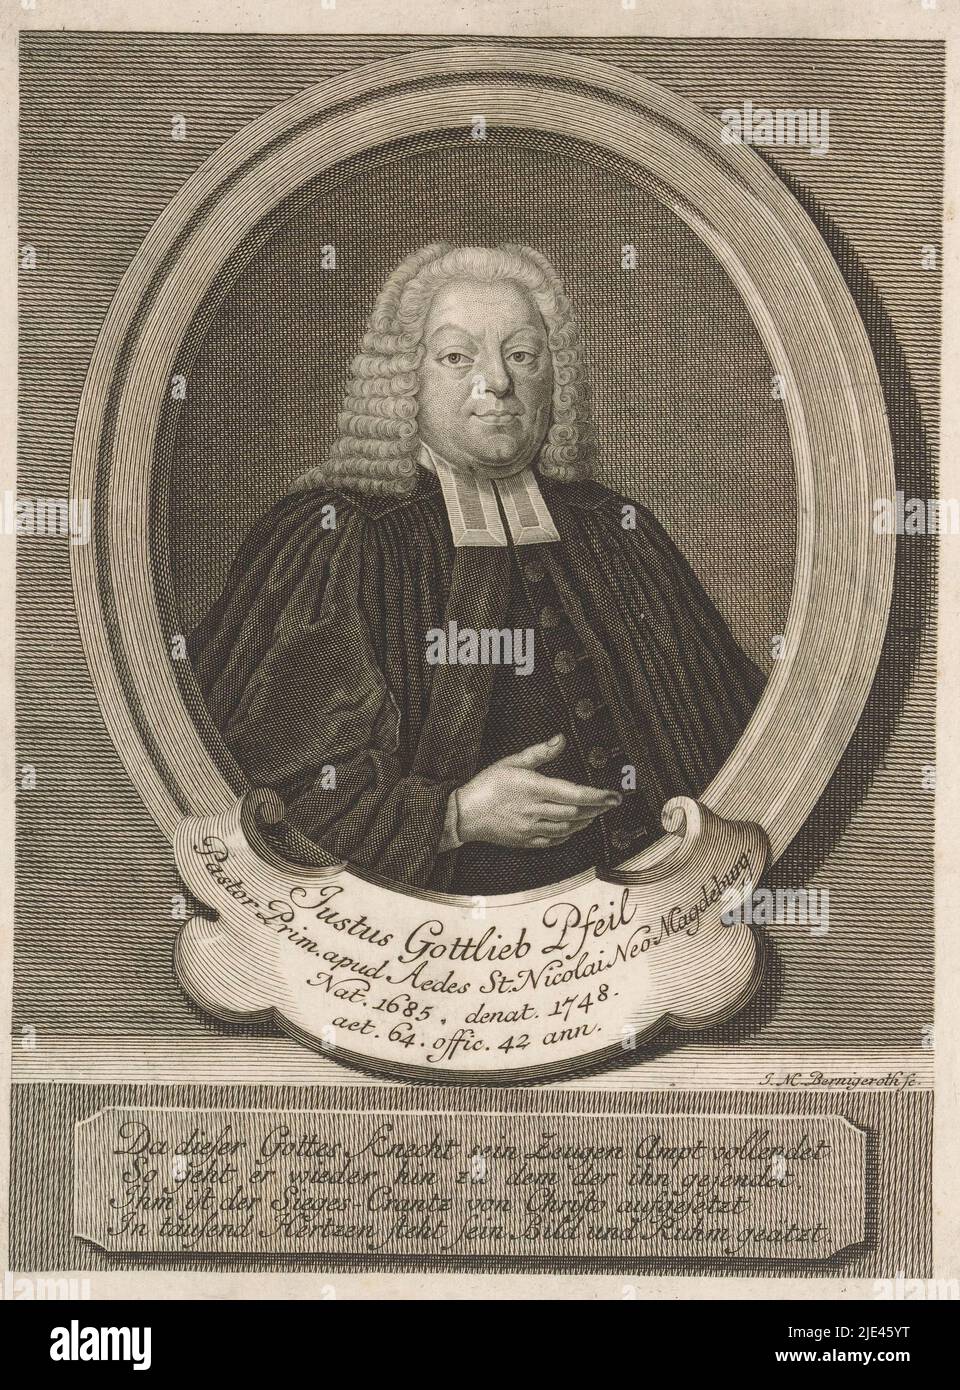 Portrait of Justus Gottlieb Pfeil, Johann Martin Bernigeroth, 1748 - 1767, print maker: Johann Martin Bernigeroth, (mentioned on object), Leipzig, 1748 - 1767, paper, engraving, h 199 mm - w 155 mm Stock Photo